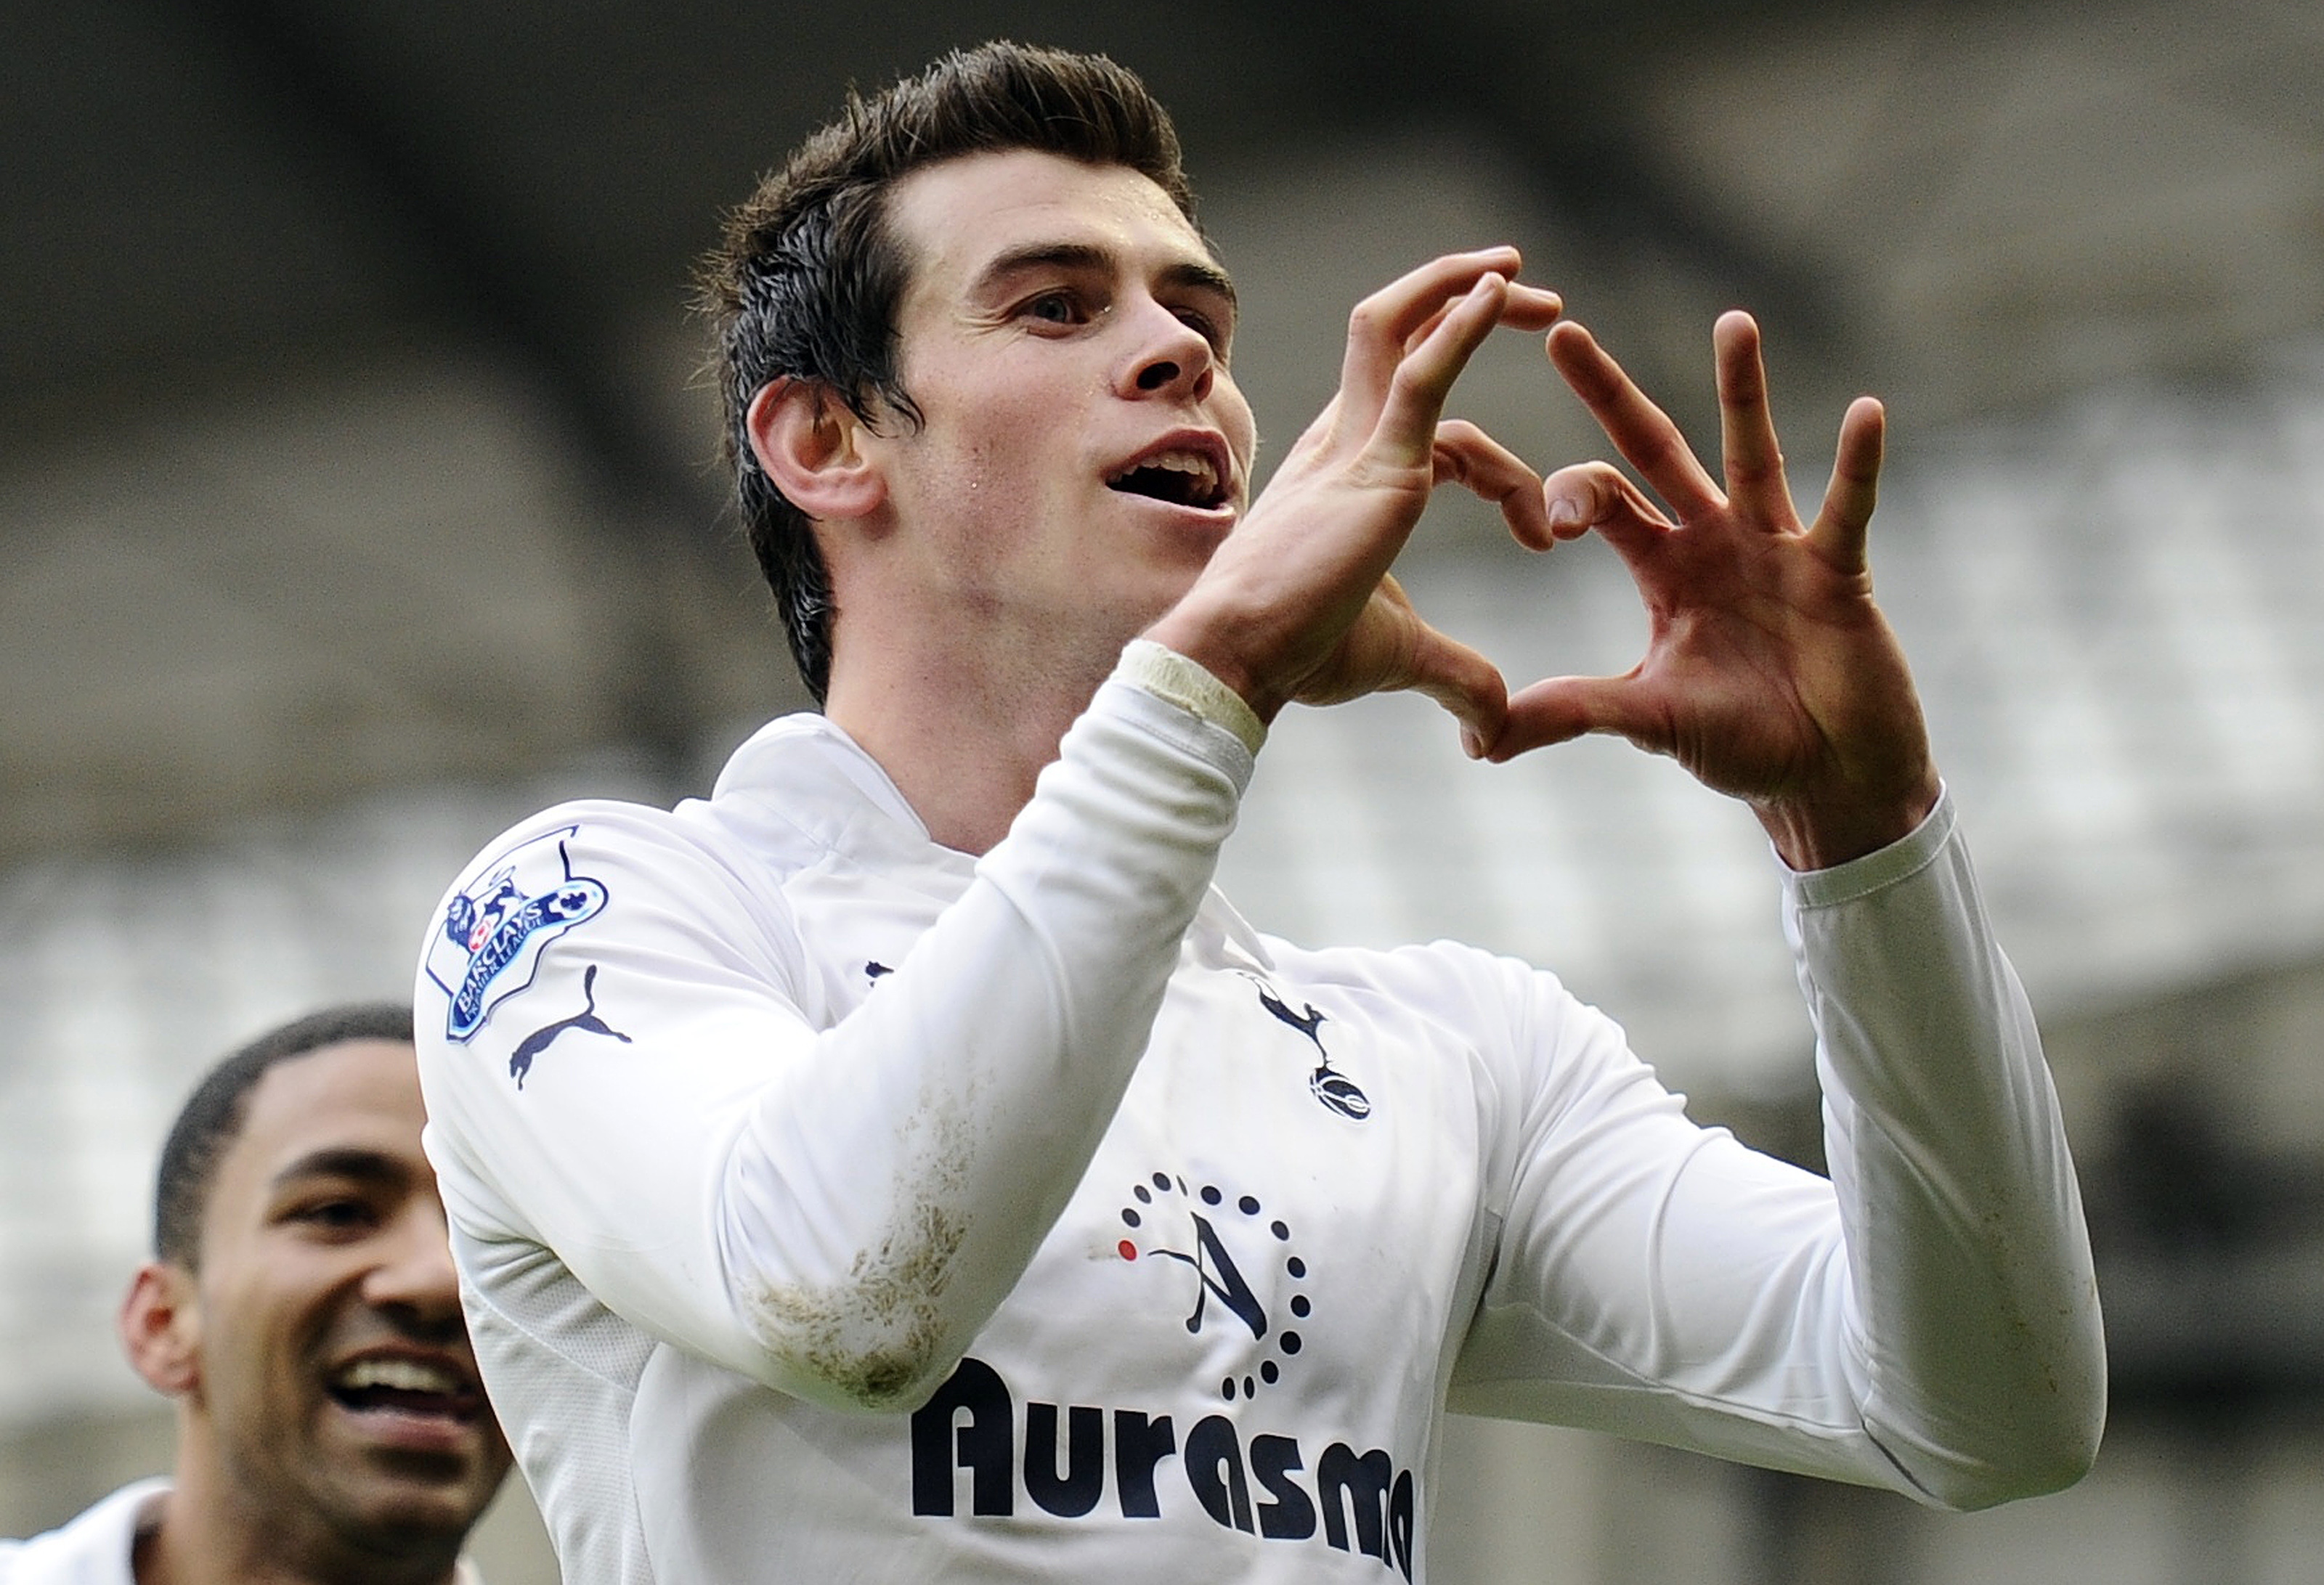 Gareth Bale from Tottenham to Real Madrid (2013) - $132.6 Million